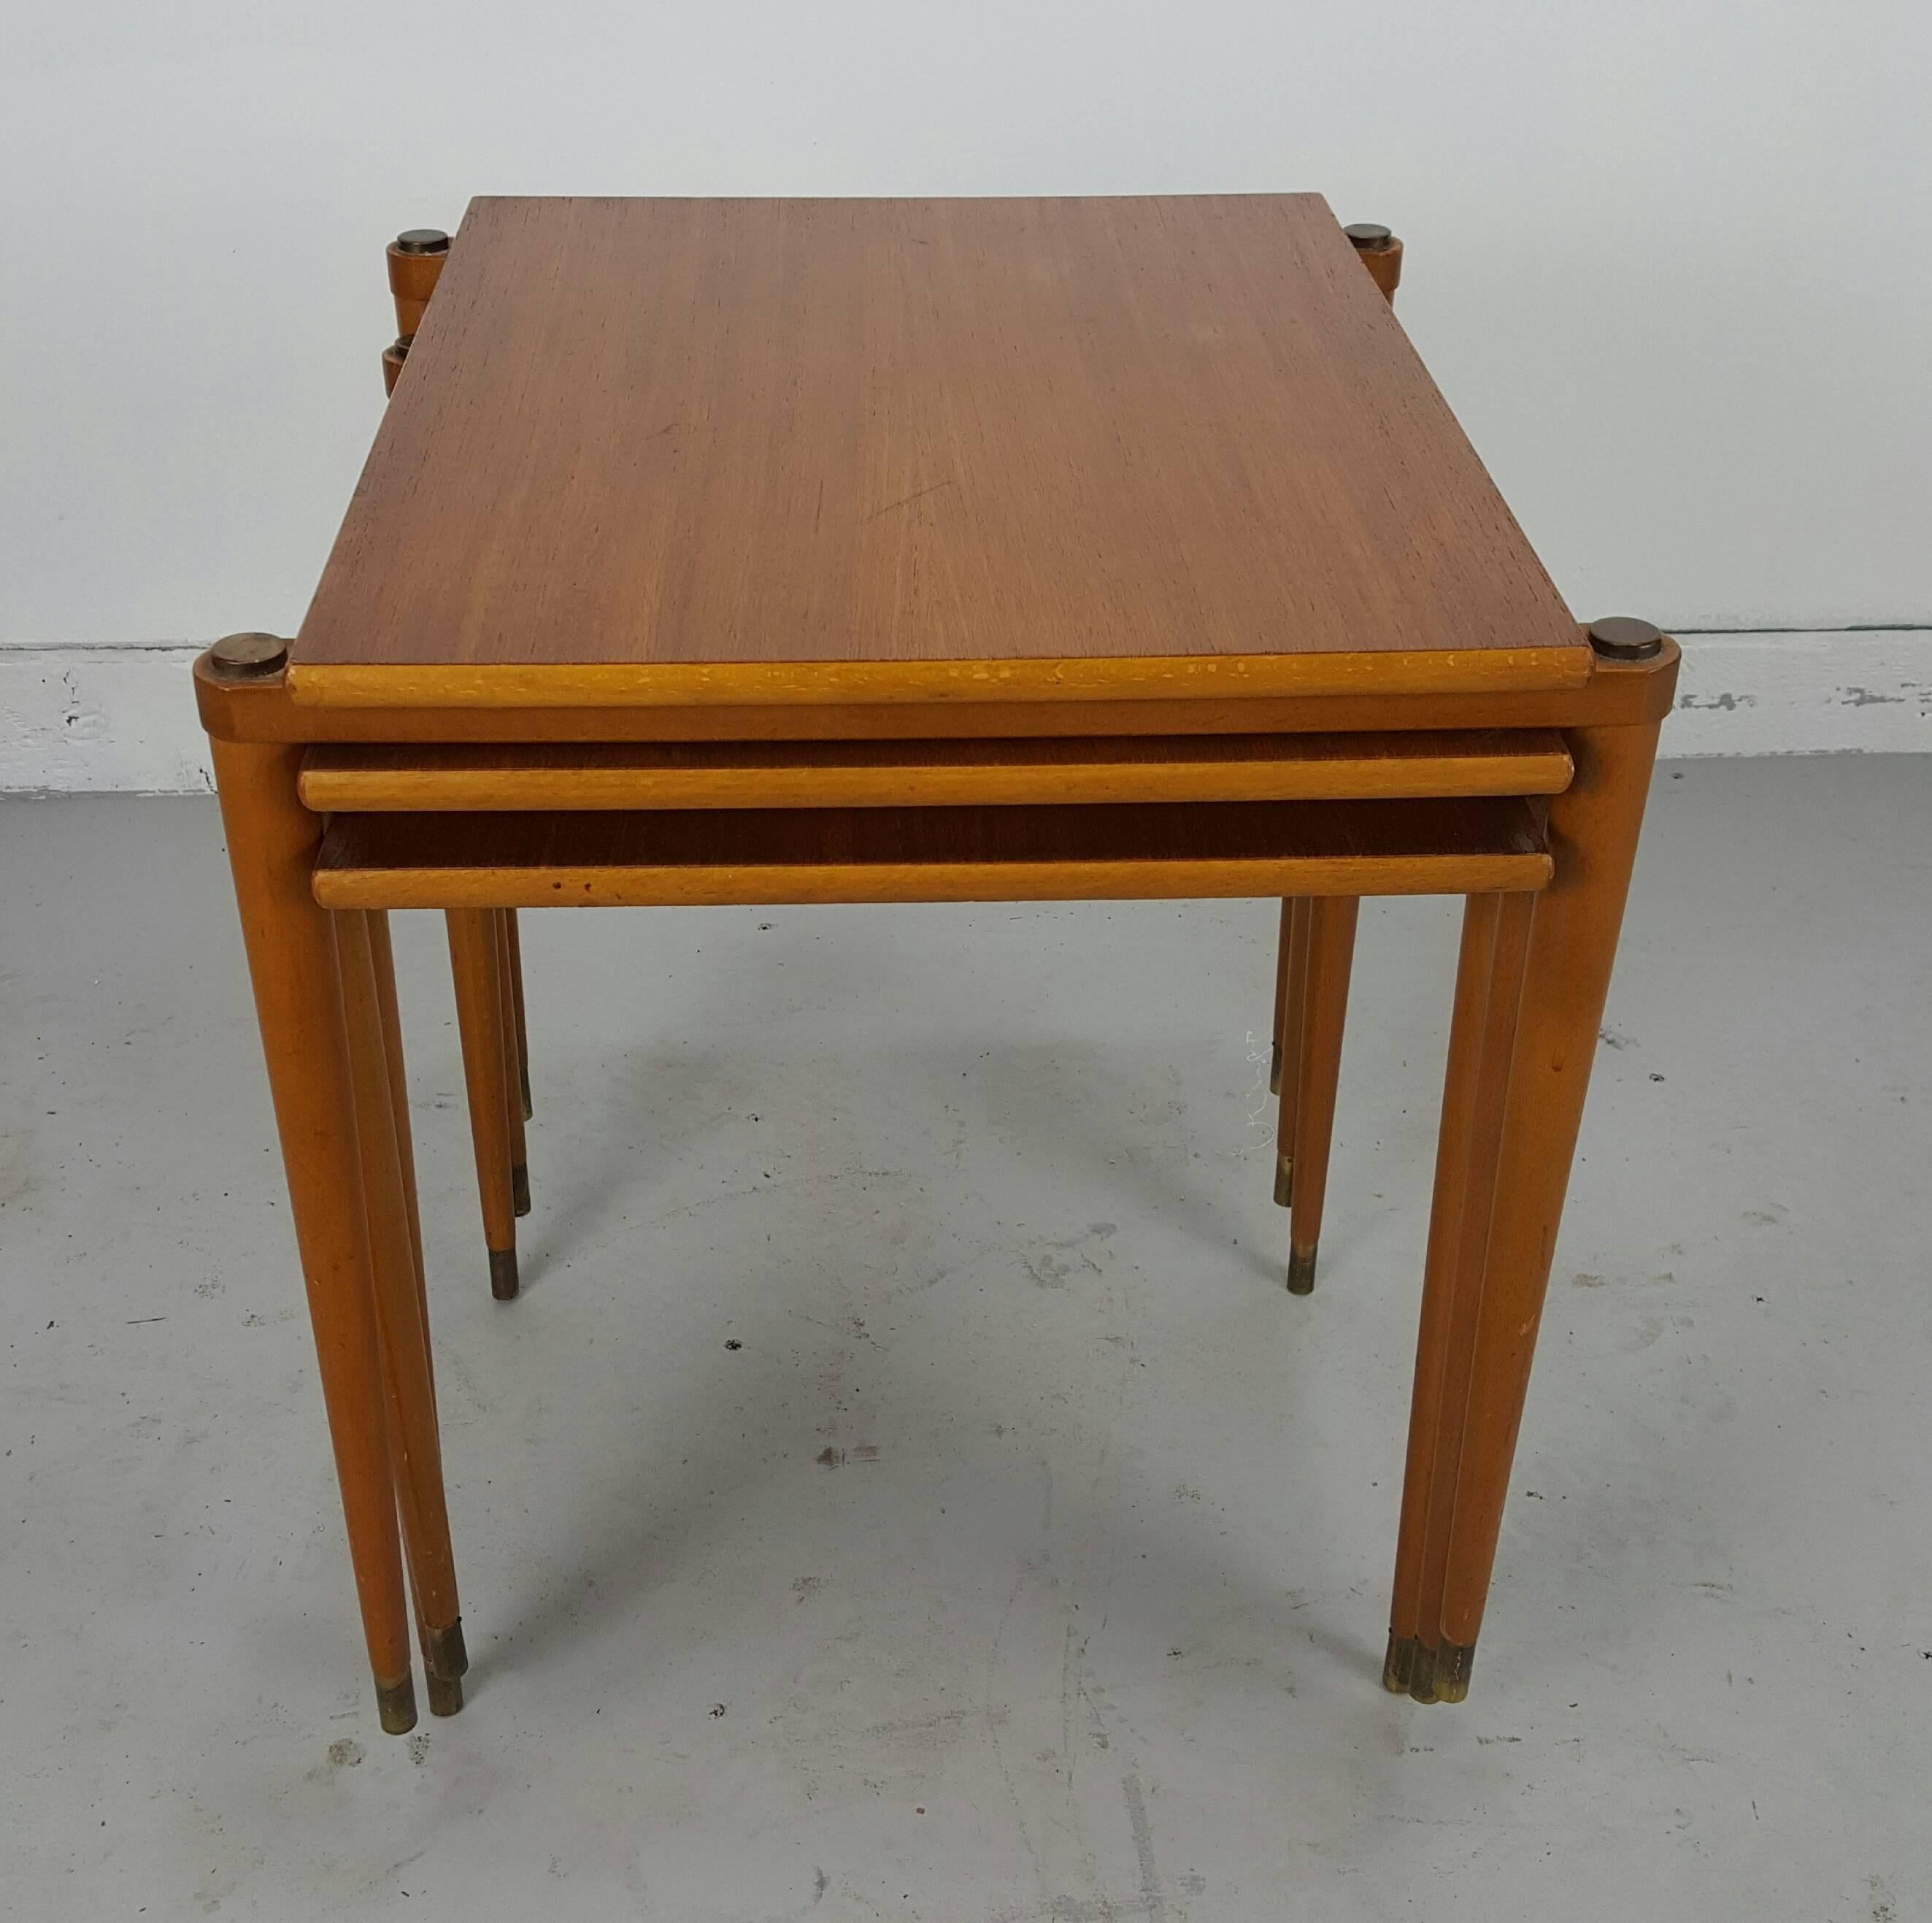 20th Century Danish Stackable Tables Manner of Jens Quistgaard for Nissen